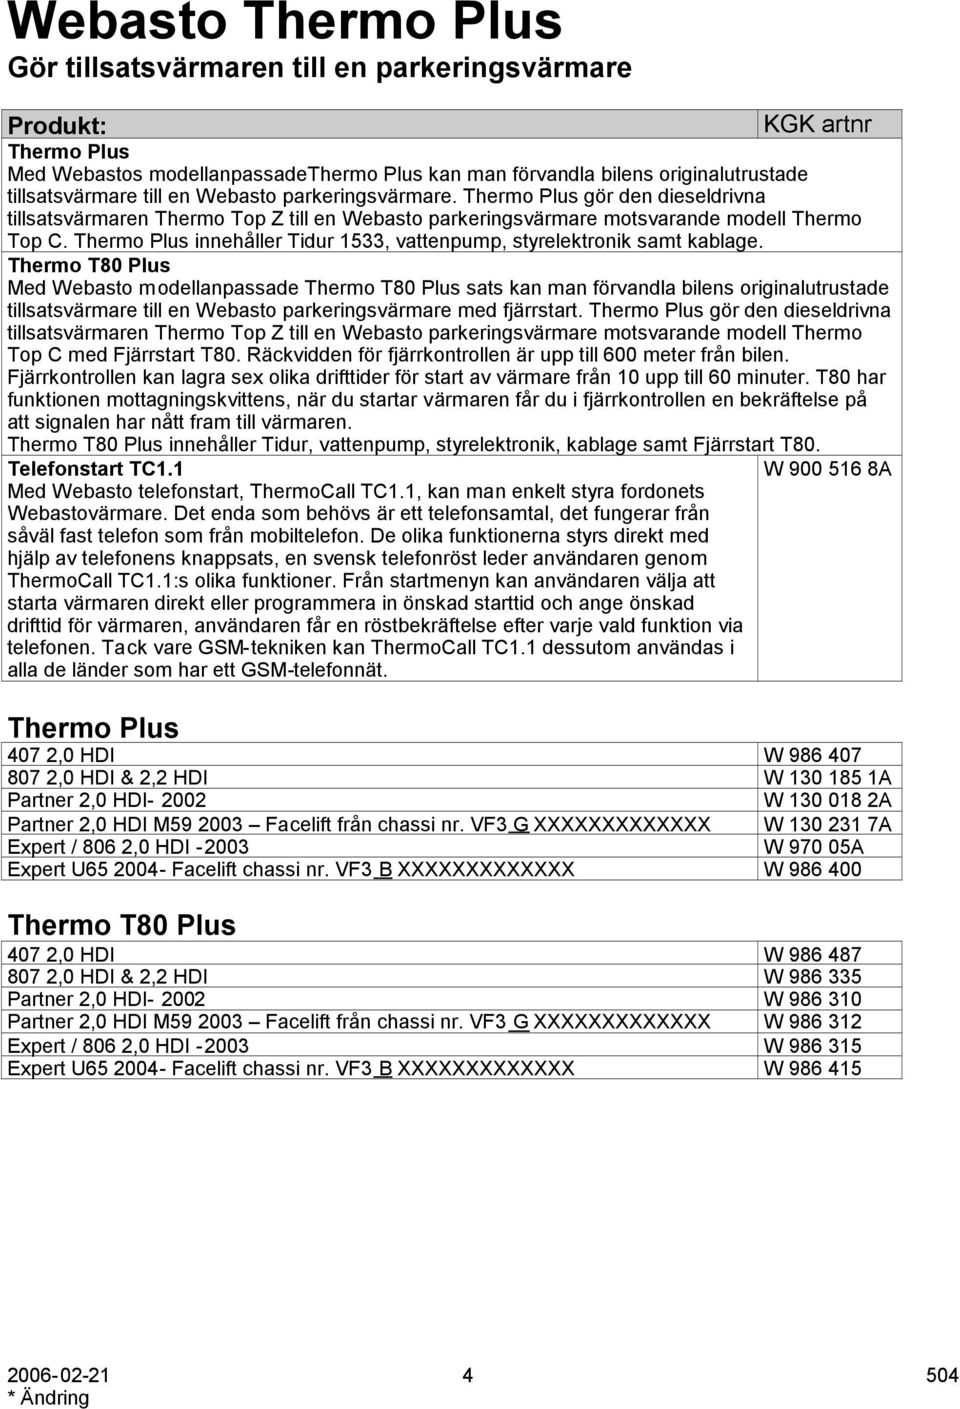 Thermo Plus innehåller Tidur 1533, vattenpump, styrelektronik samt kablage.